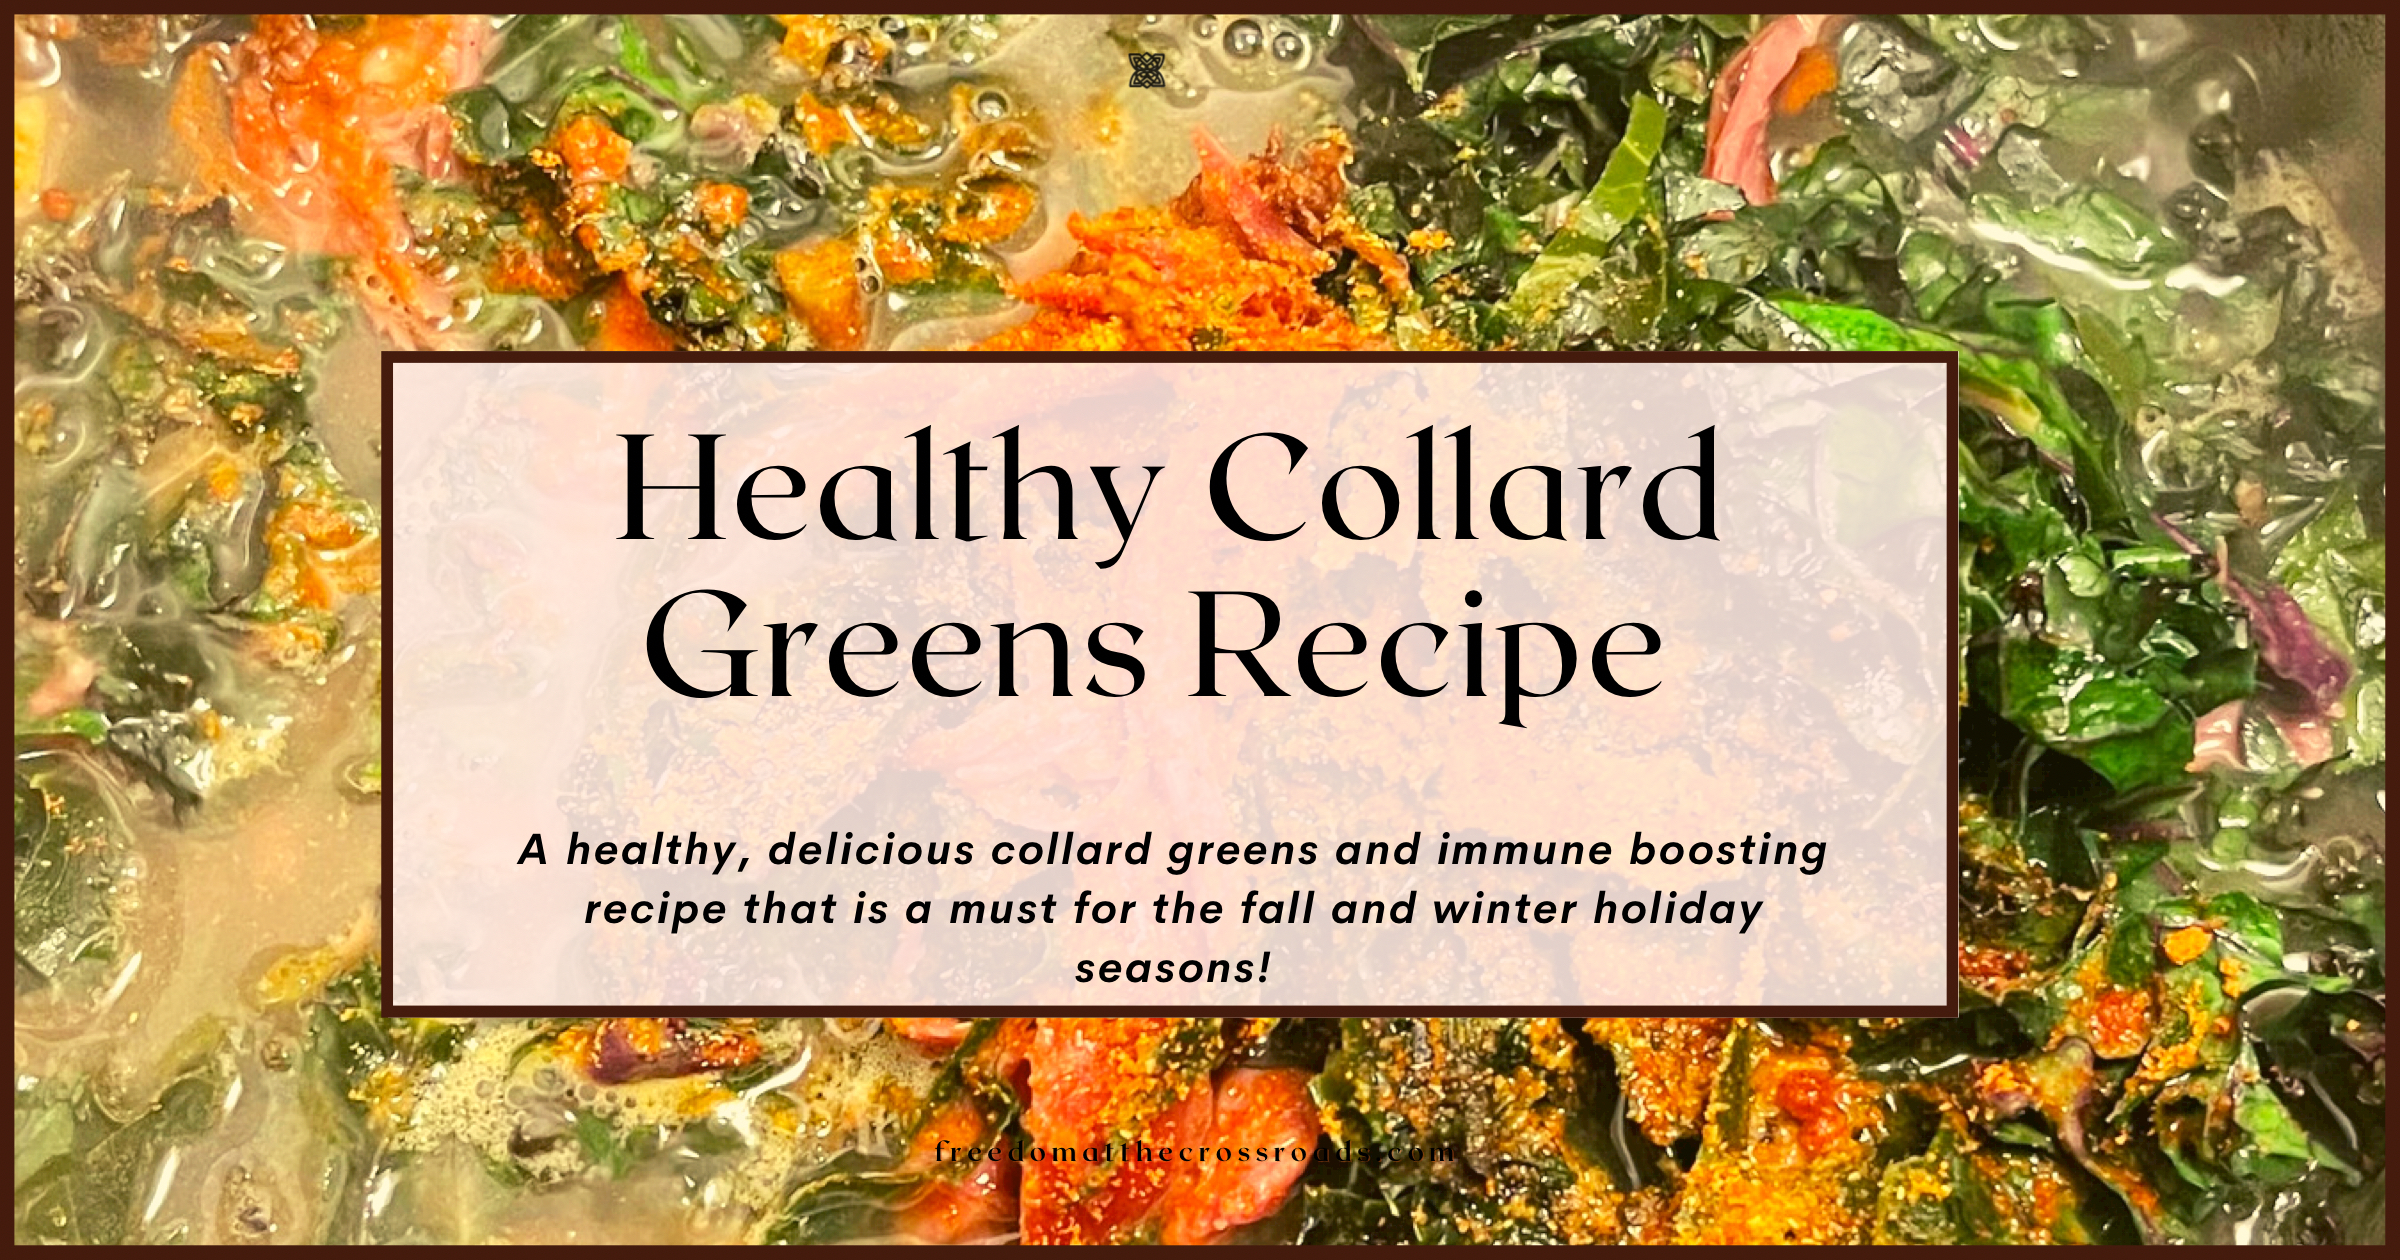 Healthy collard greens recipe blog post image